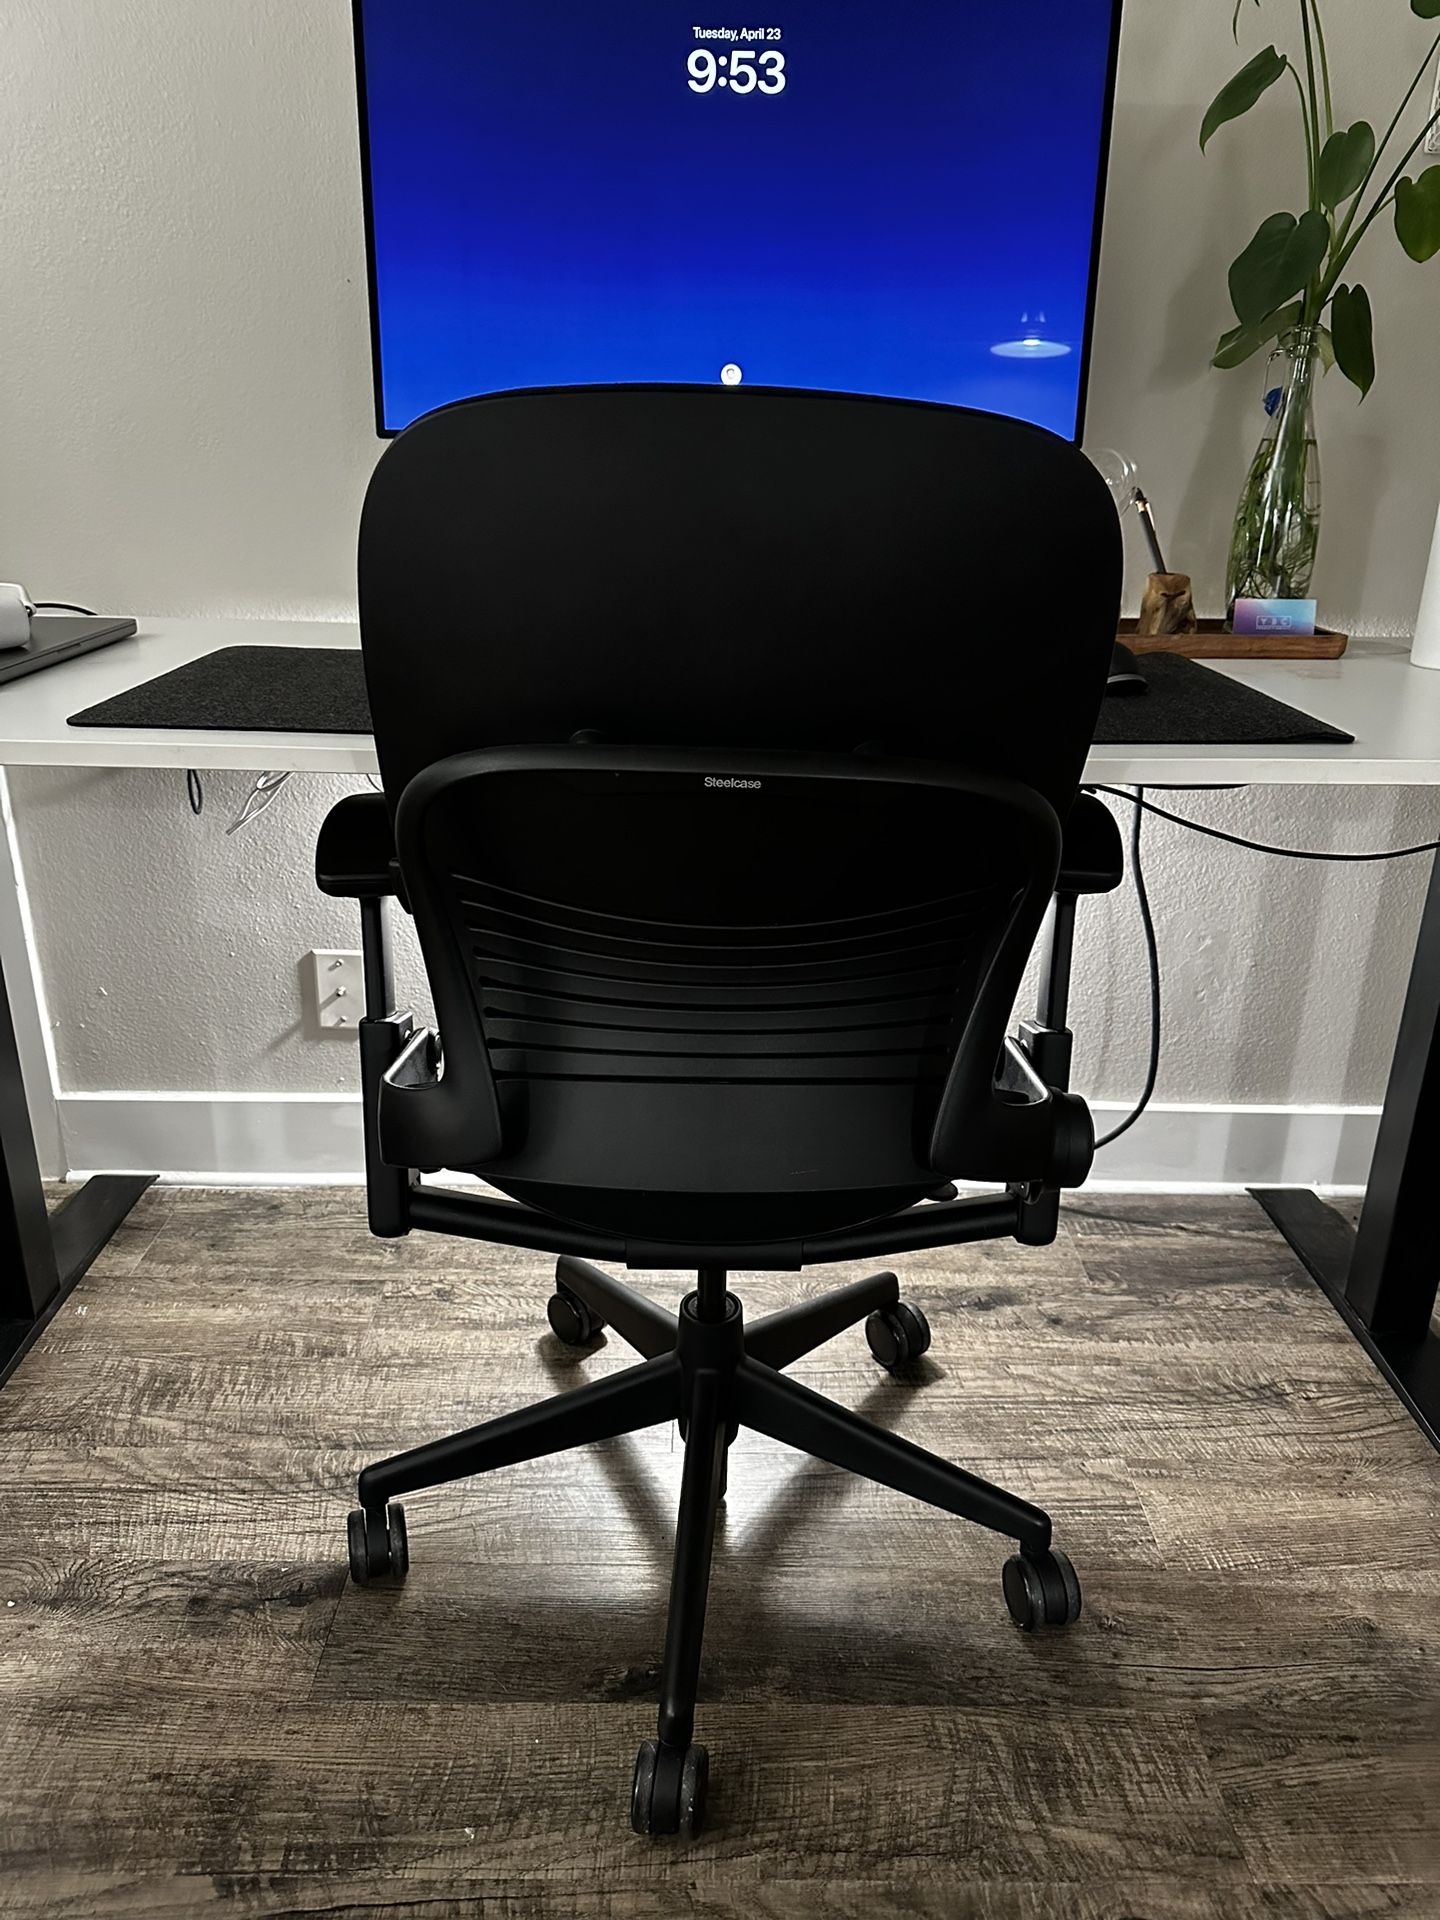 Steelcase Peak V2 Office Chair